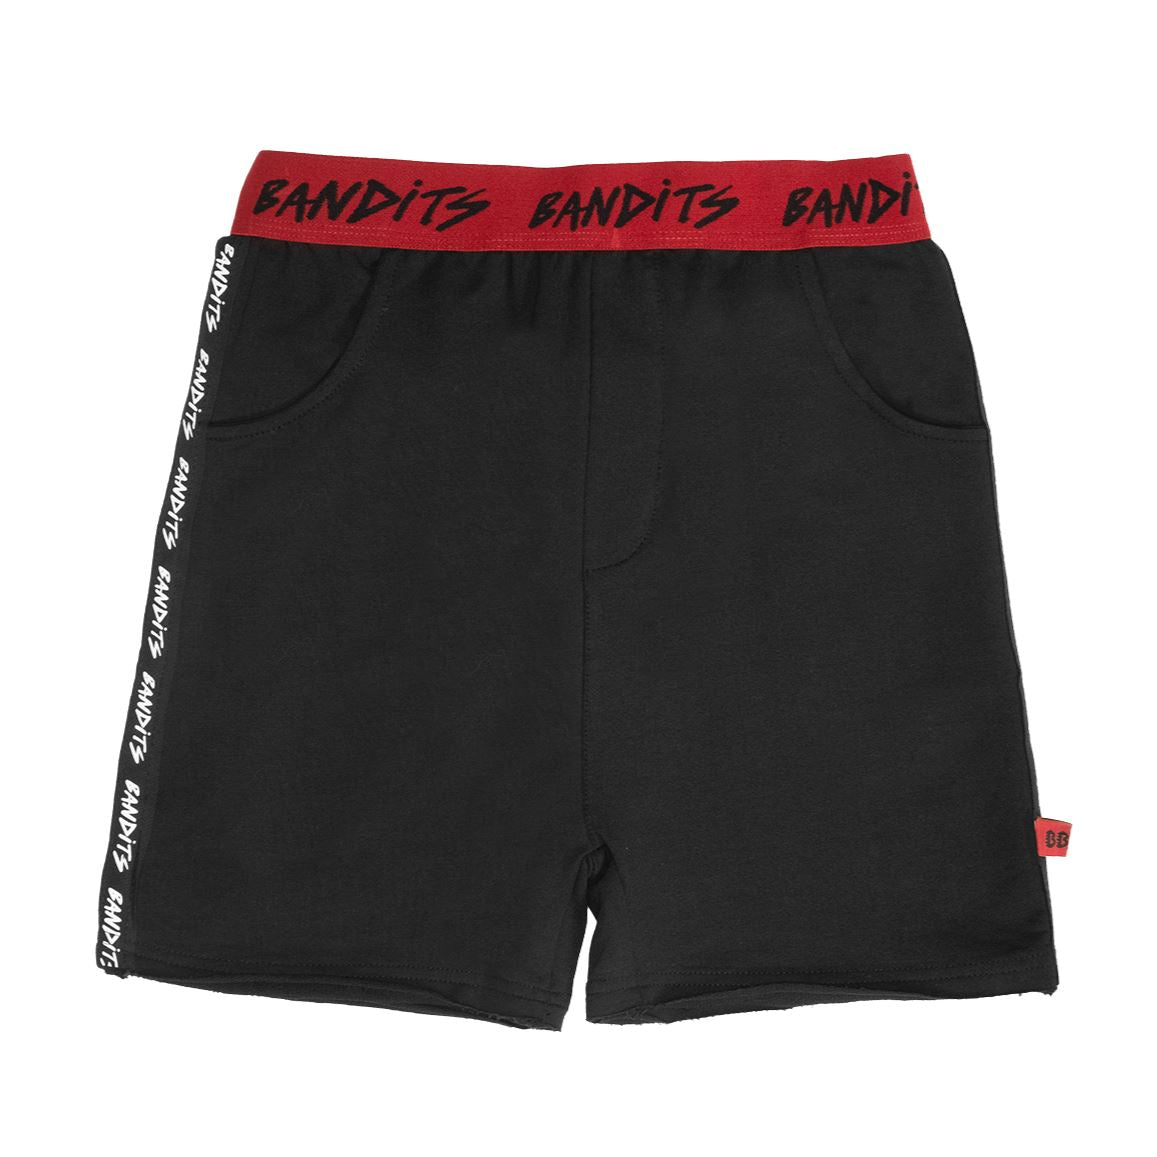 Bandits Tape Shorts